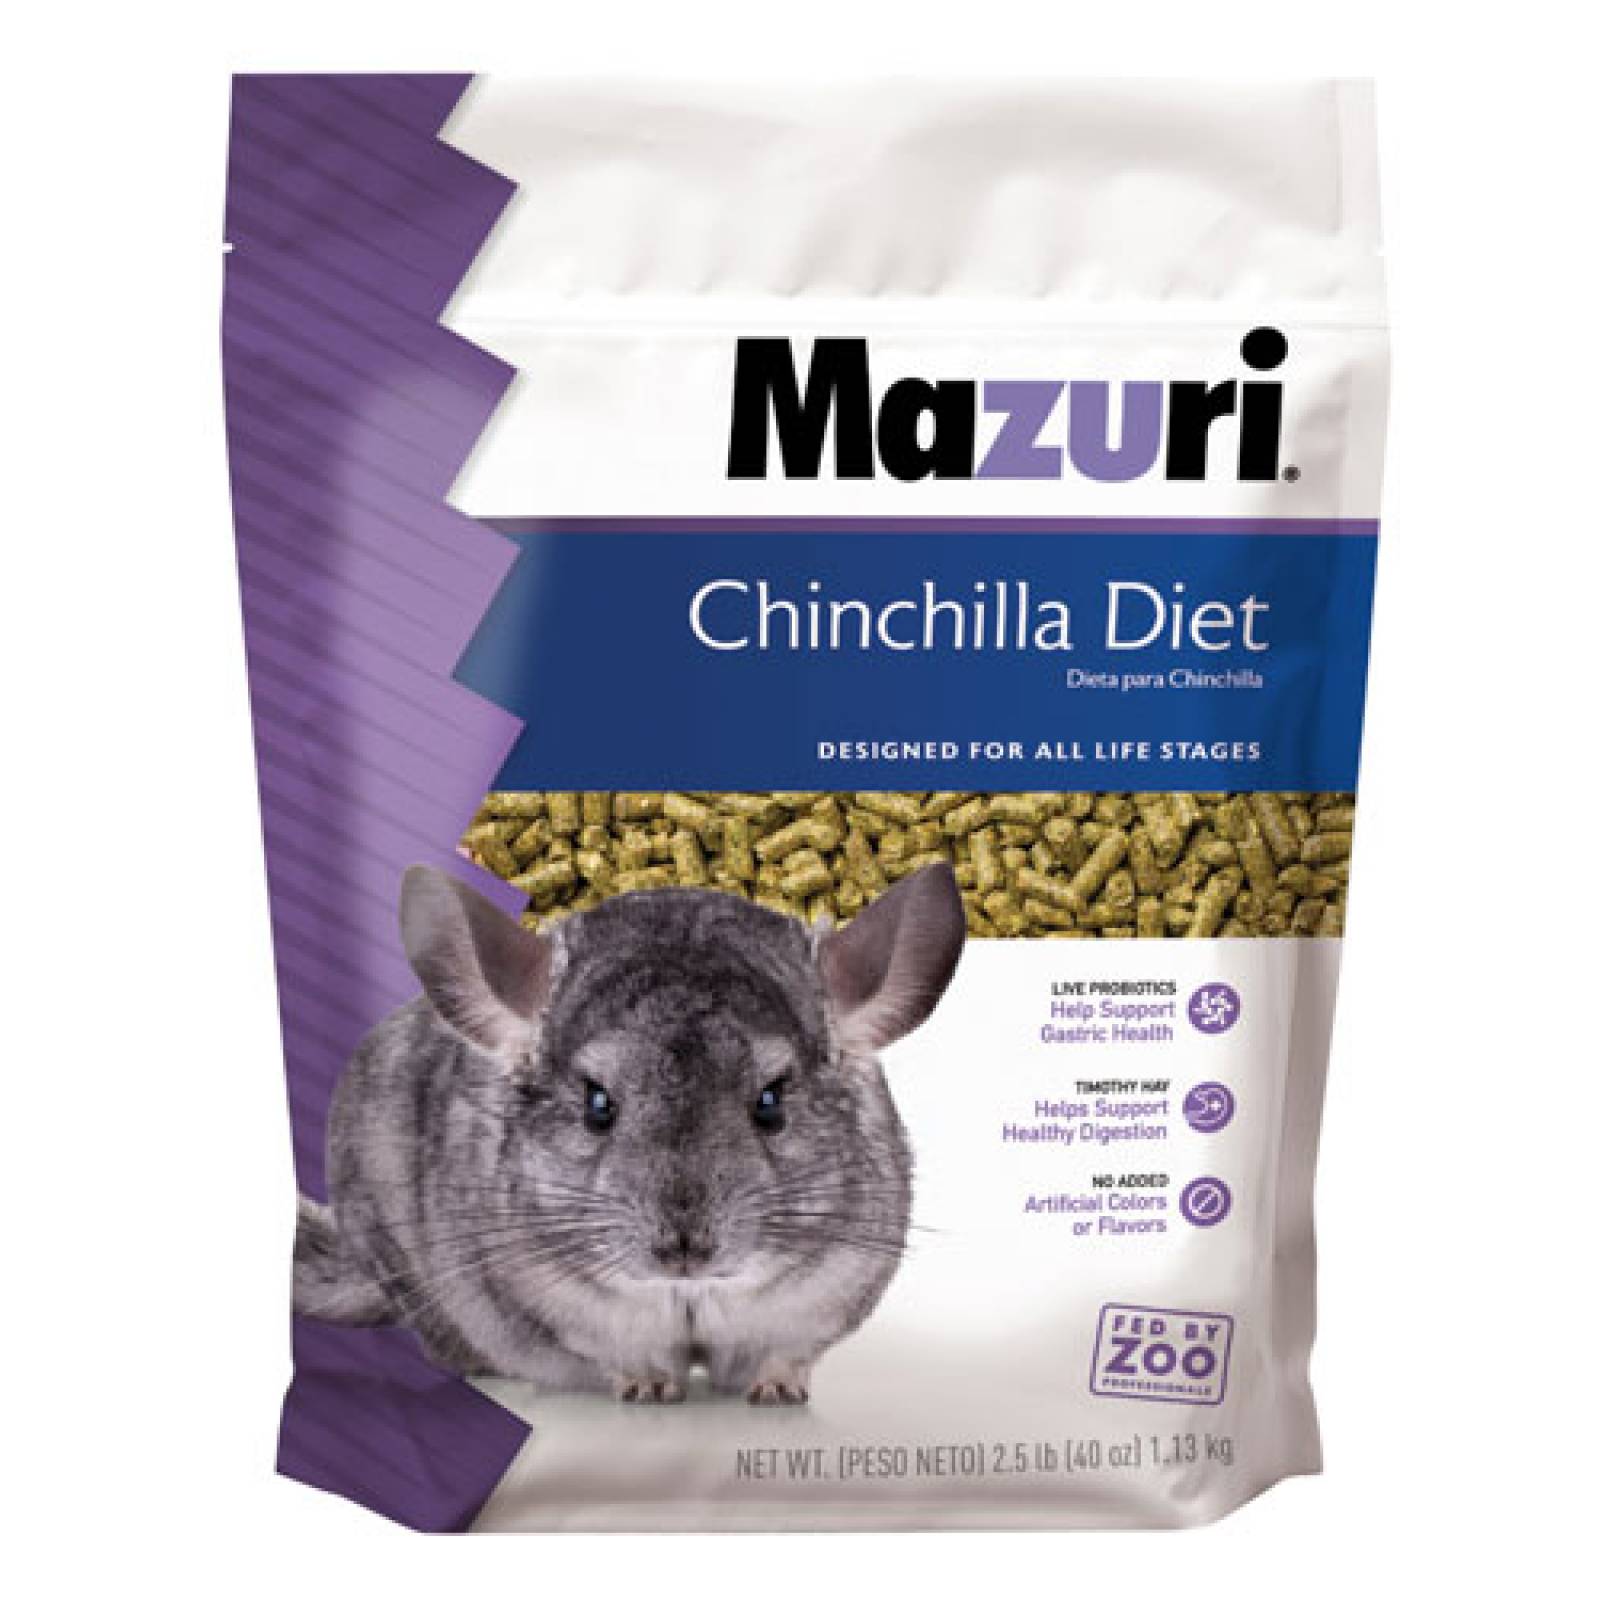 Mazuri Alimento para Chinchilla 1.3 kg